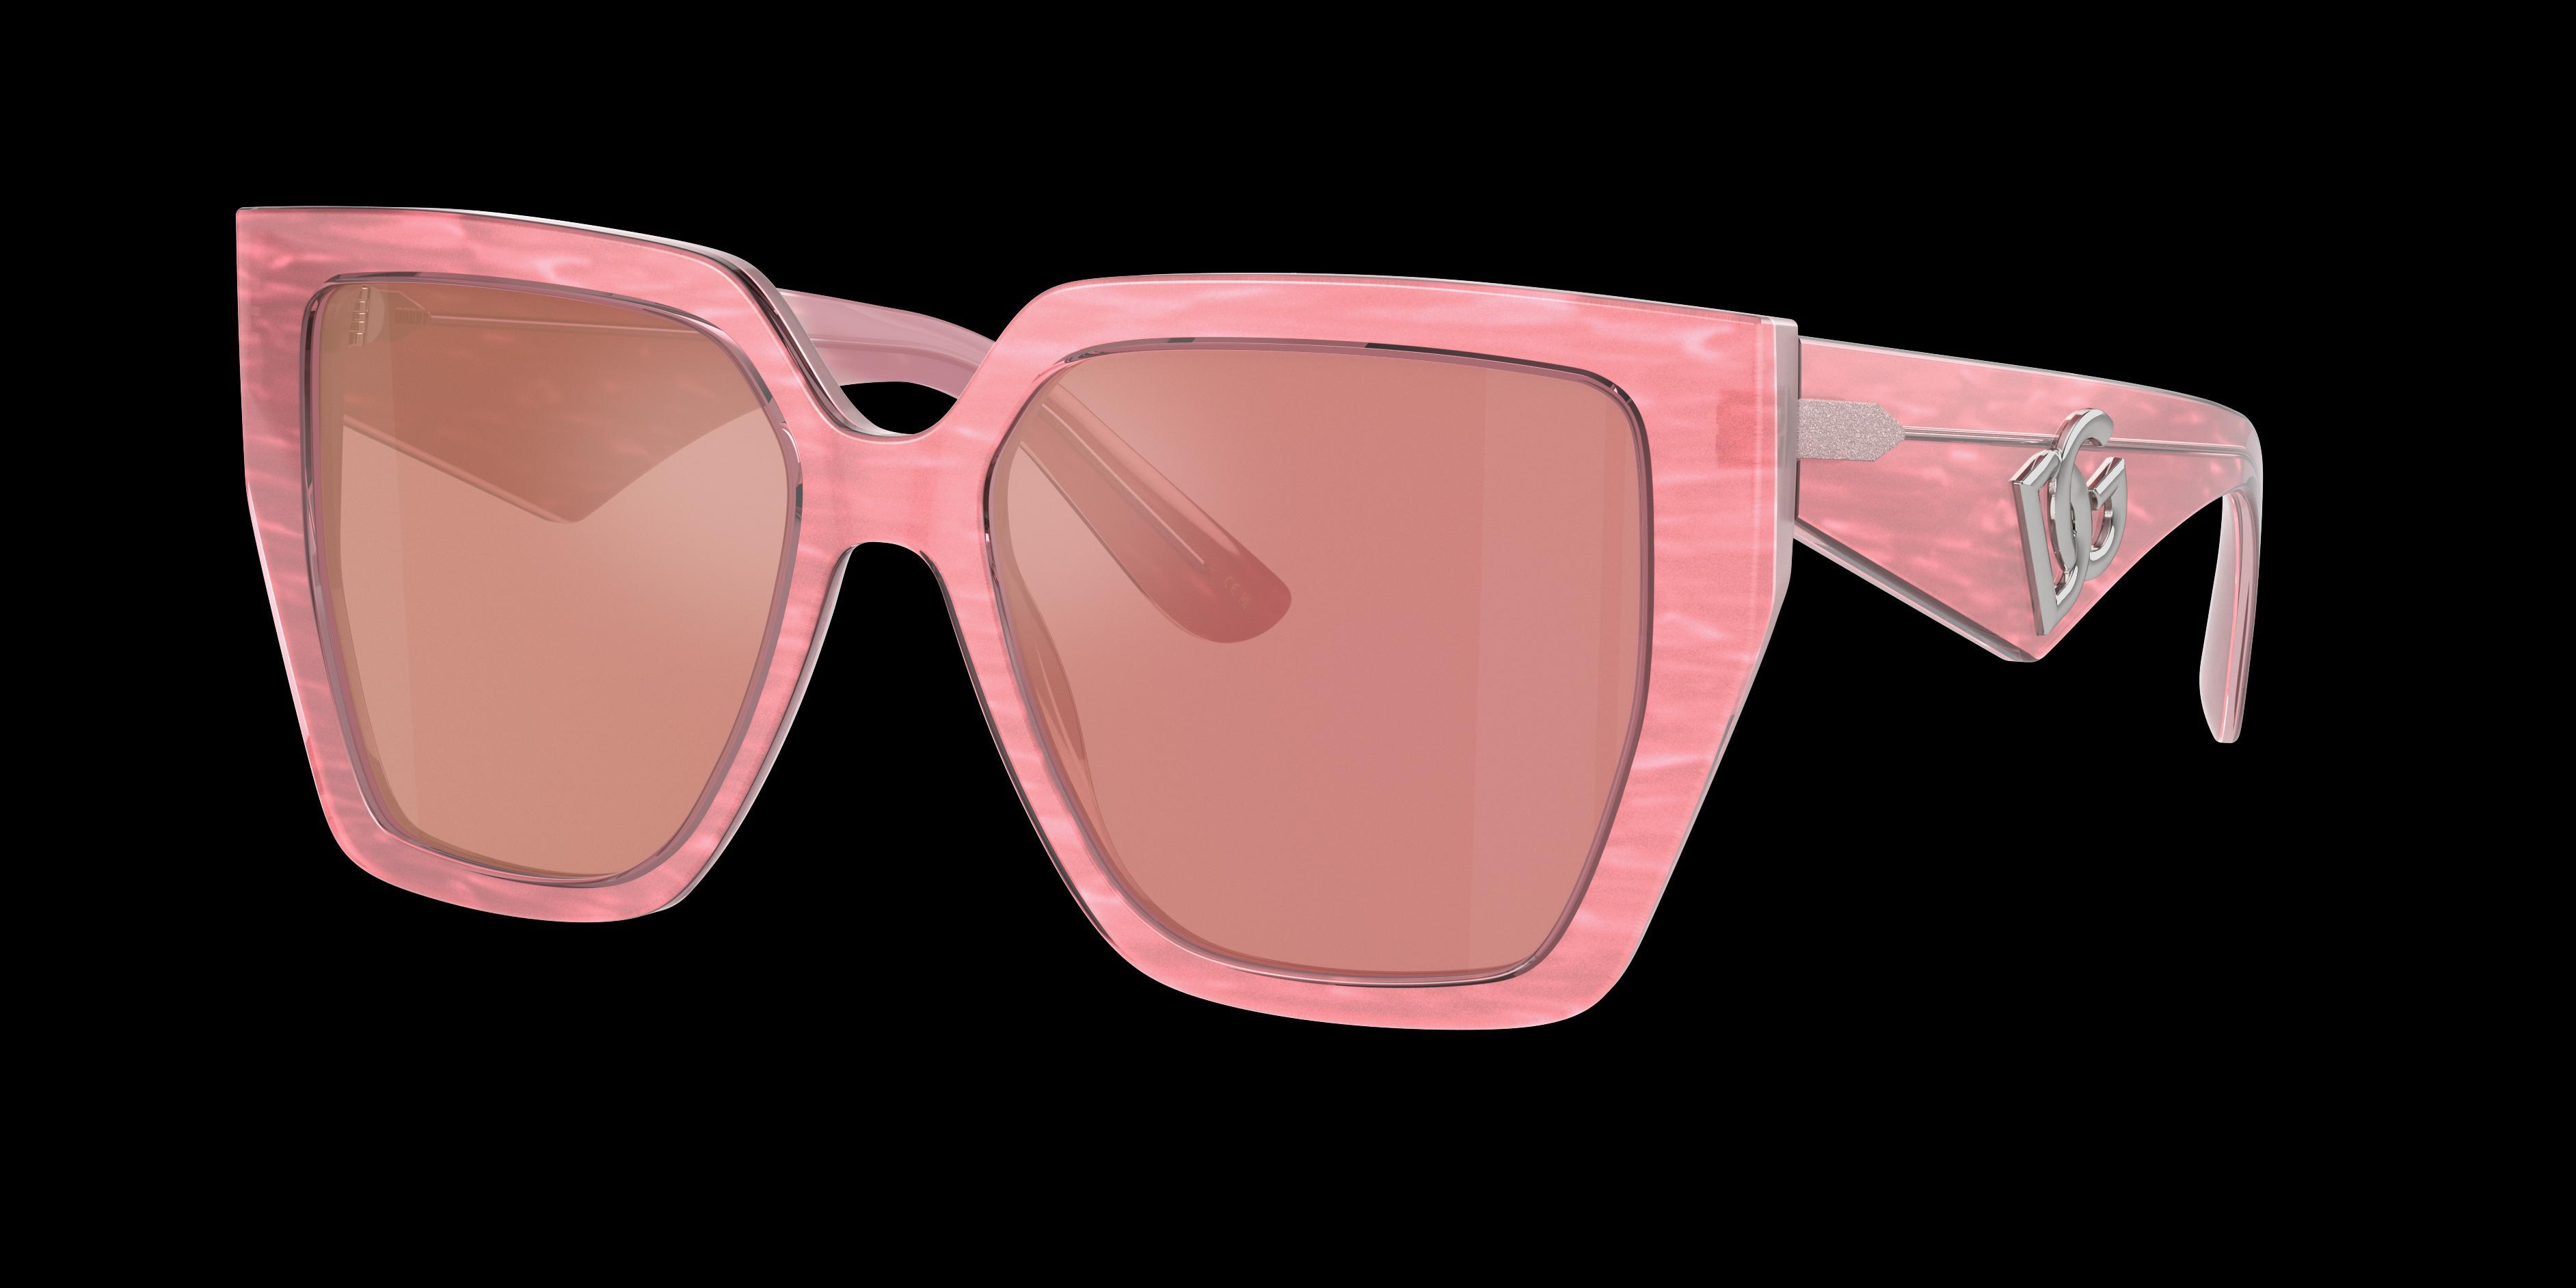 Dolce & Gabbana 55mm Square Sunglasses Product Image